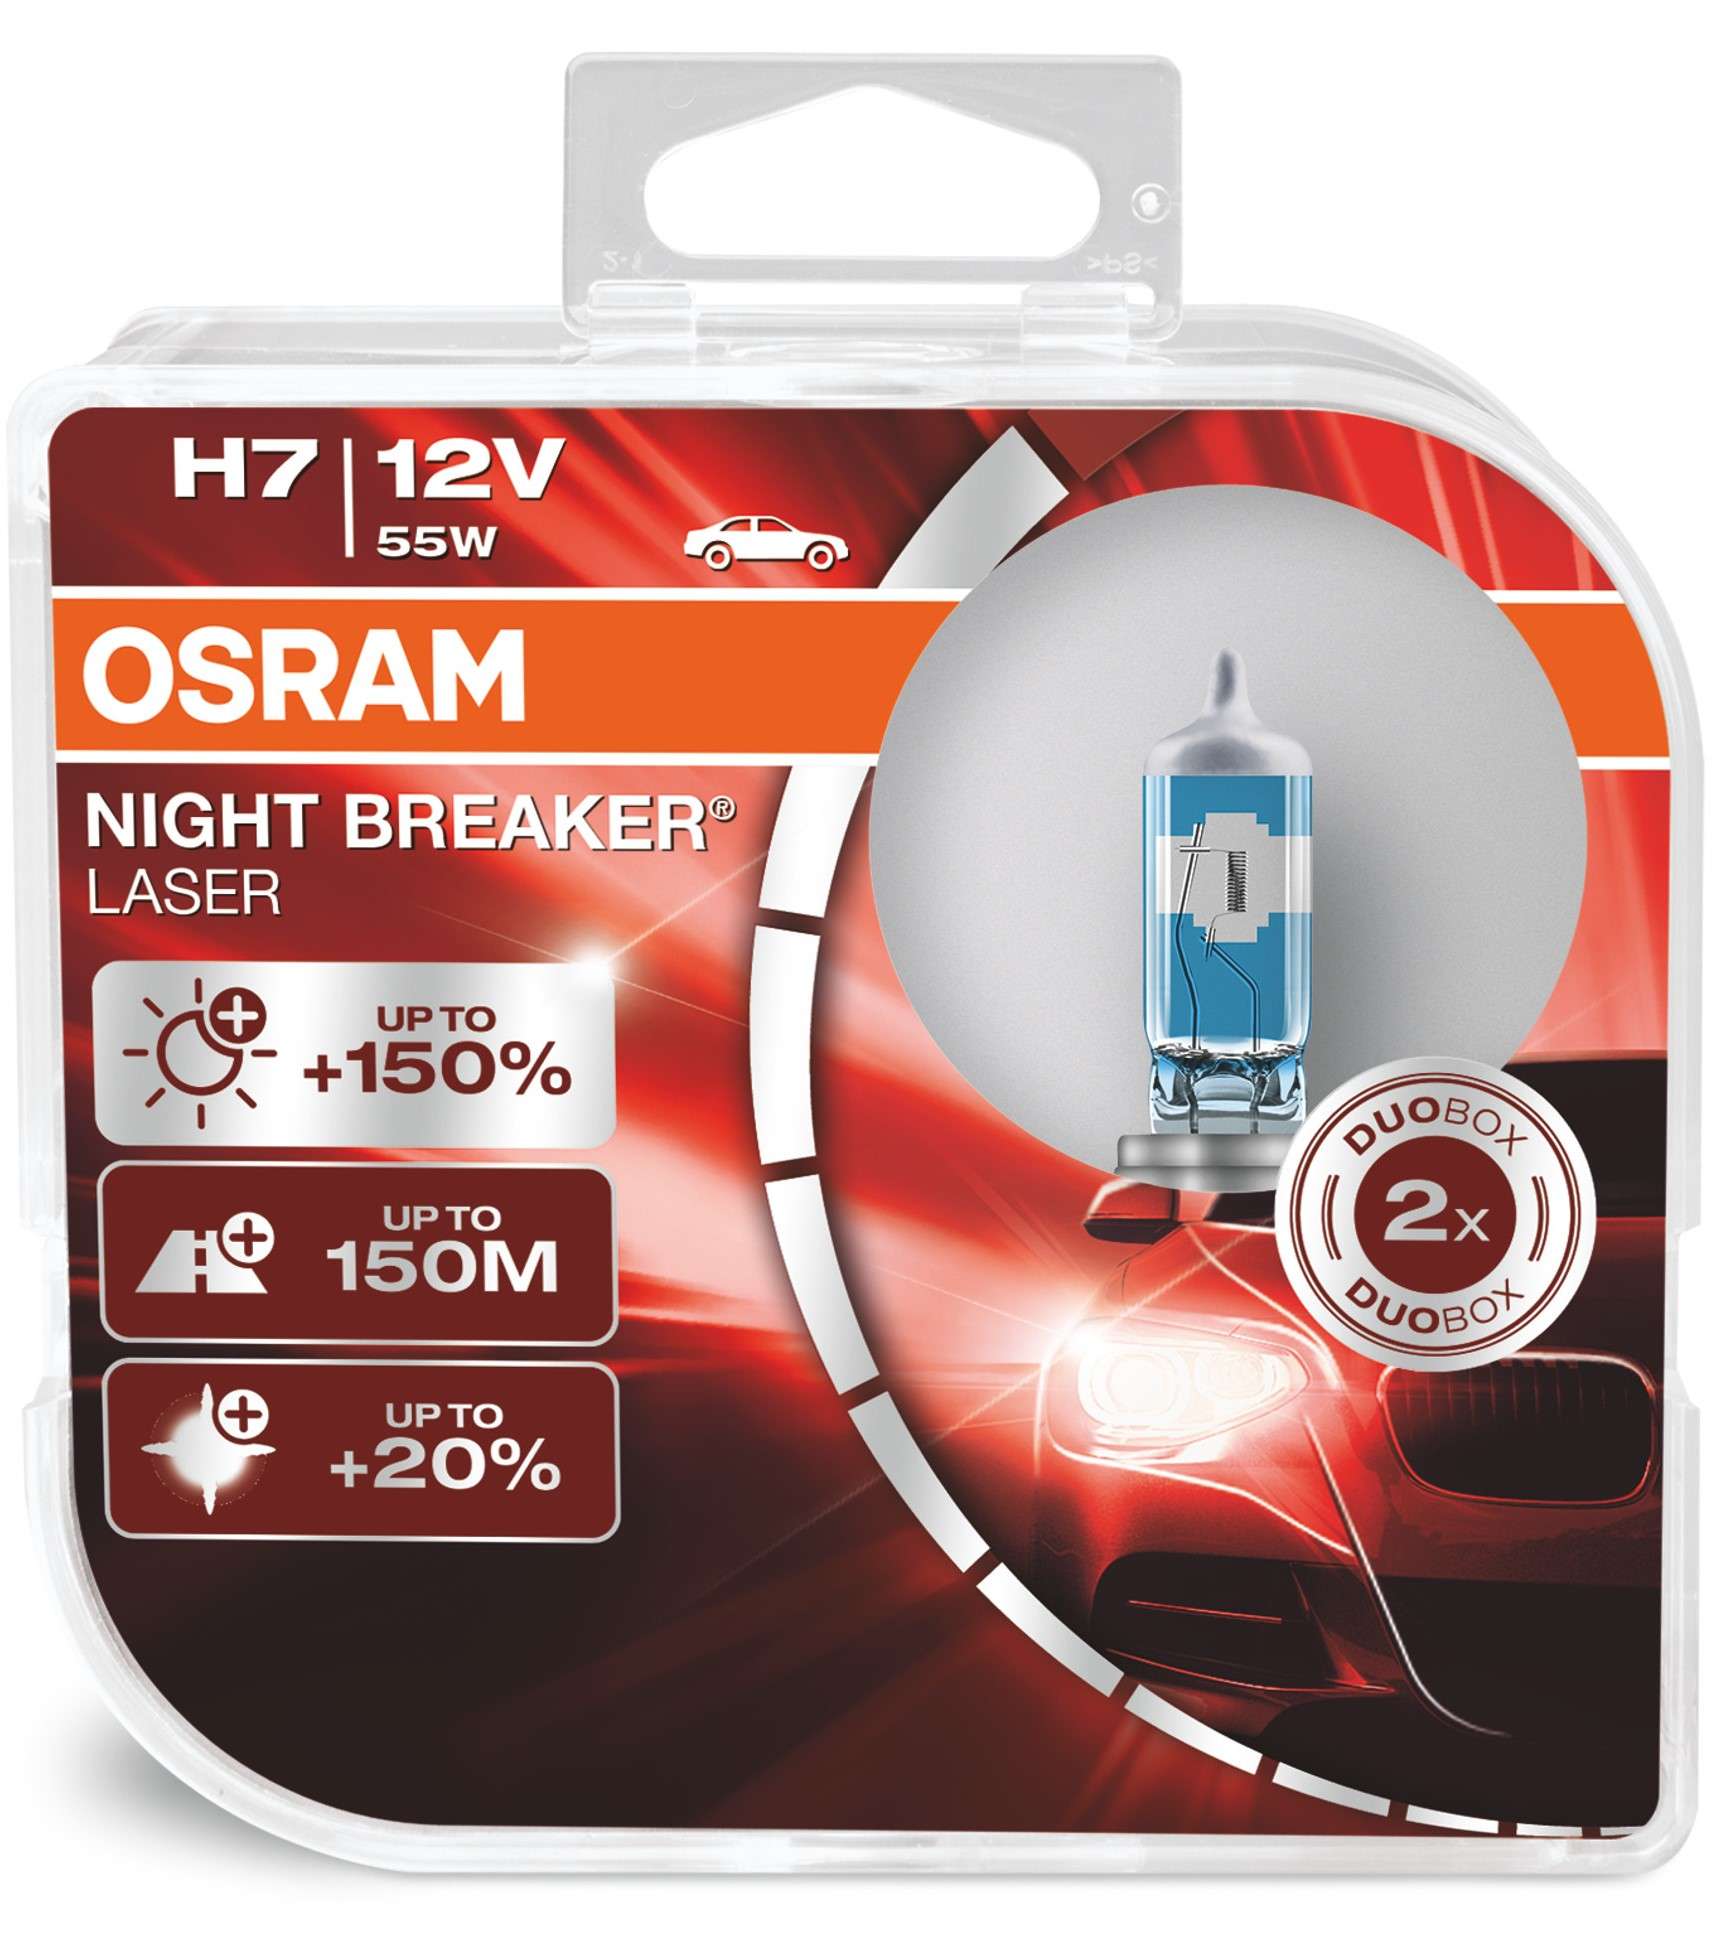 OSRAM Night Breaker Laser H1 (Duo Box) 